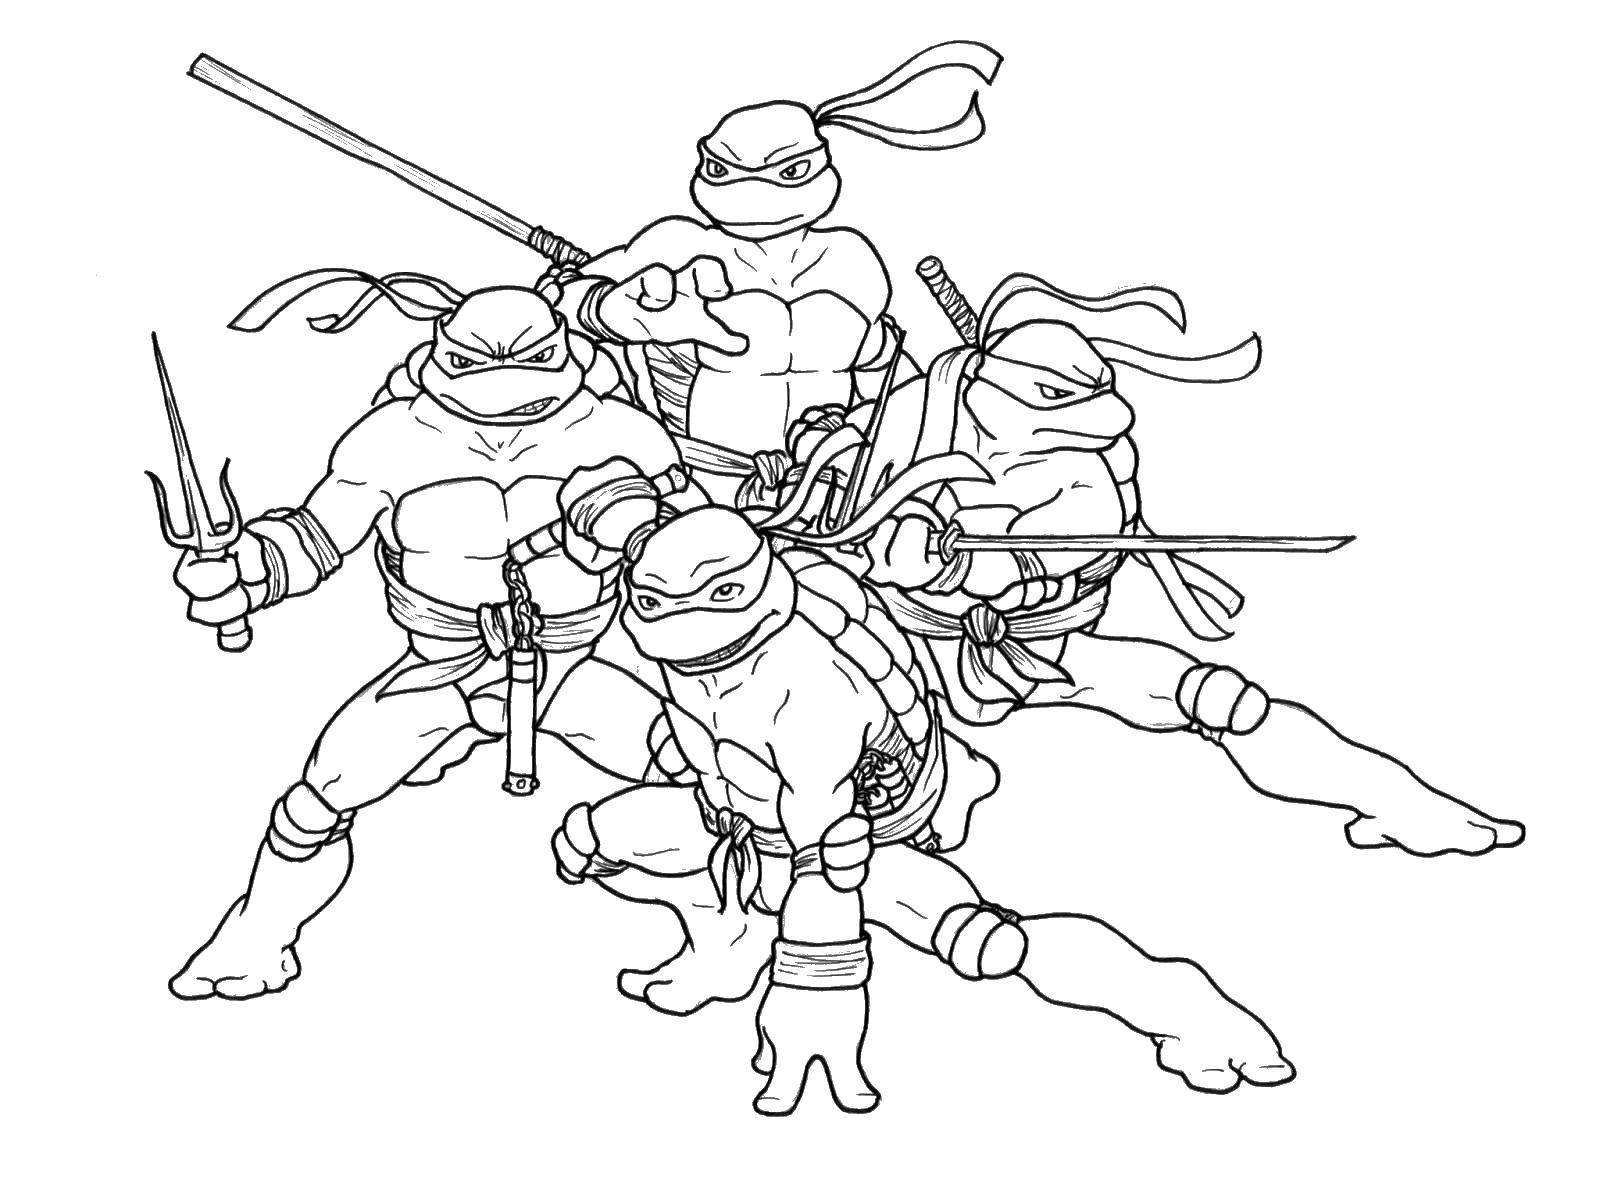 Coloring Teenage mutant ninja turtles with weapons. Category ninja . Tags:  teenage mutant ninja turtles, turtles, cartoons.